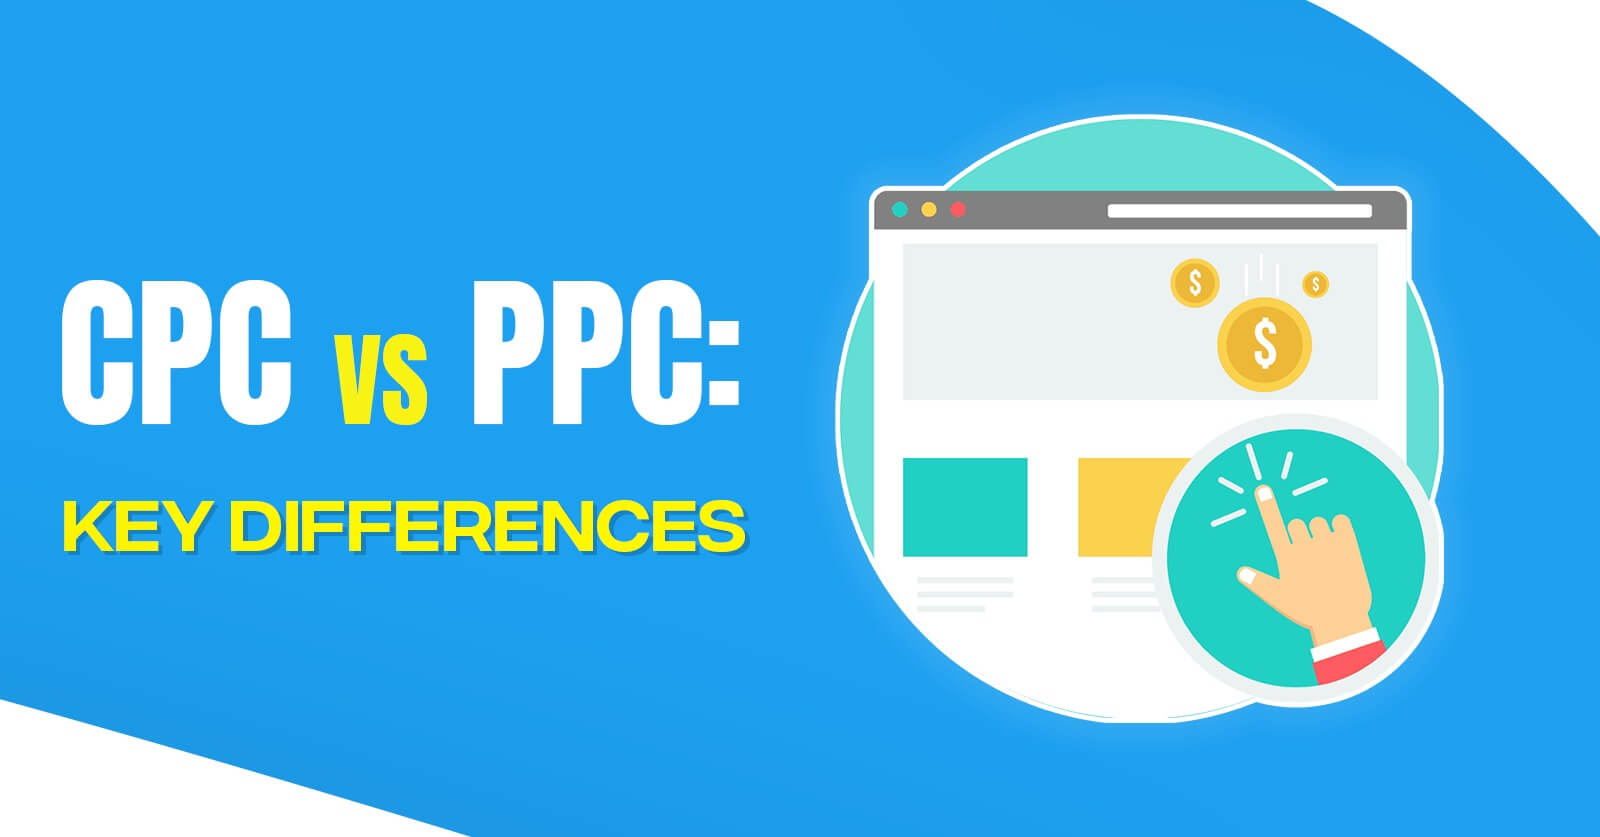 CPC vs PPC differences